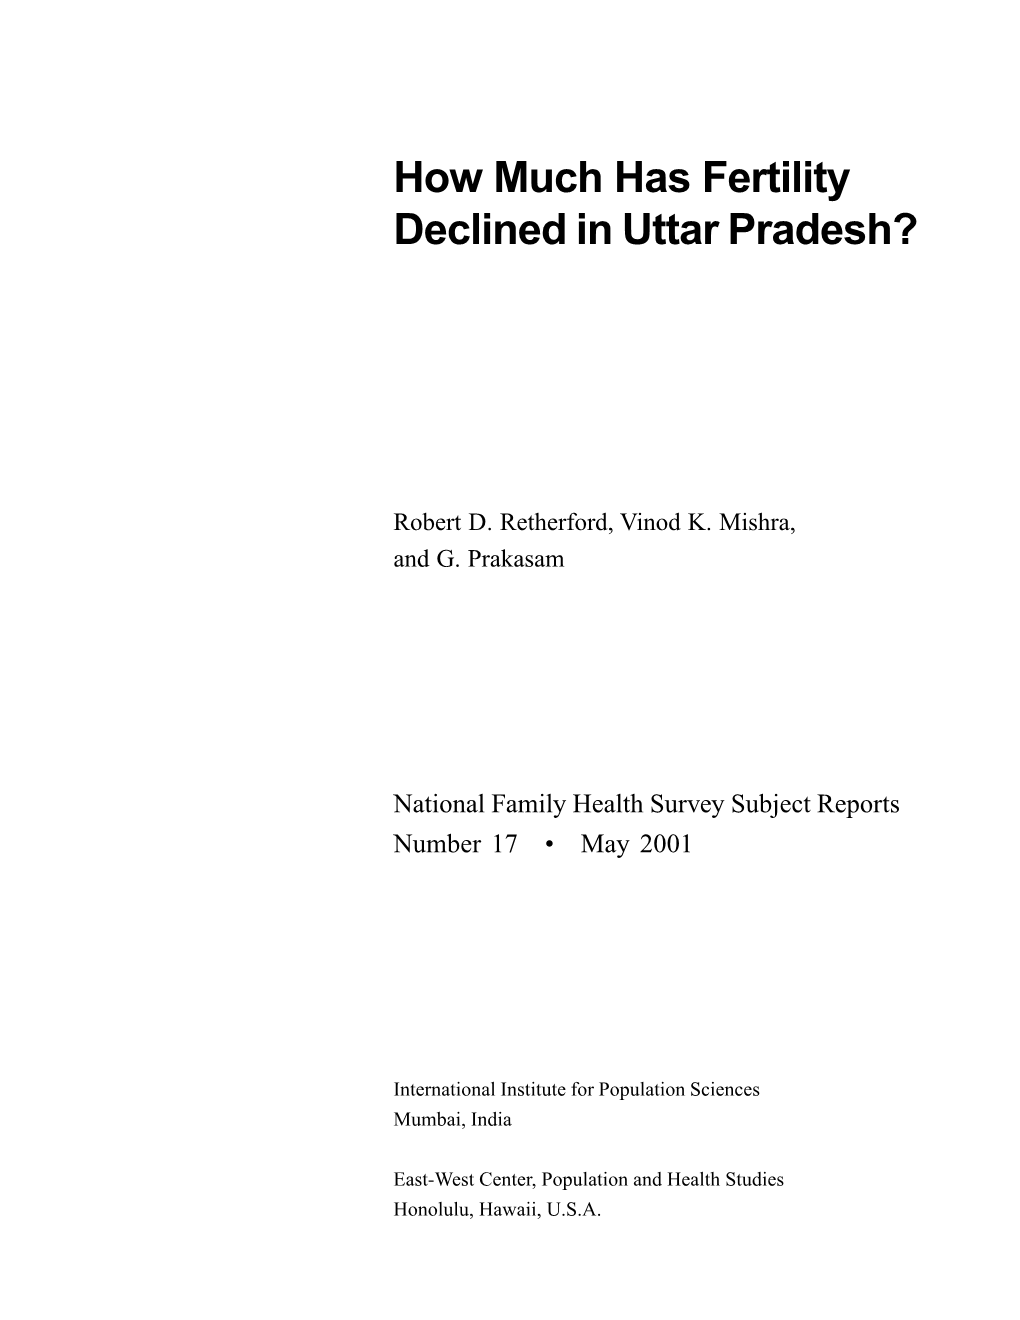 How Much Has Fertility Declined in Uttar Pradesh?